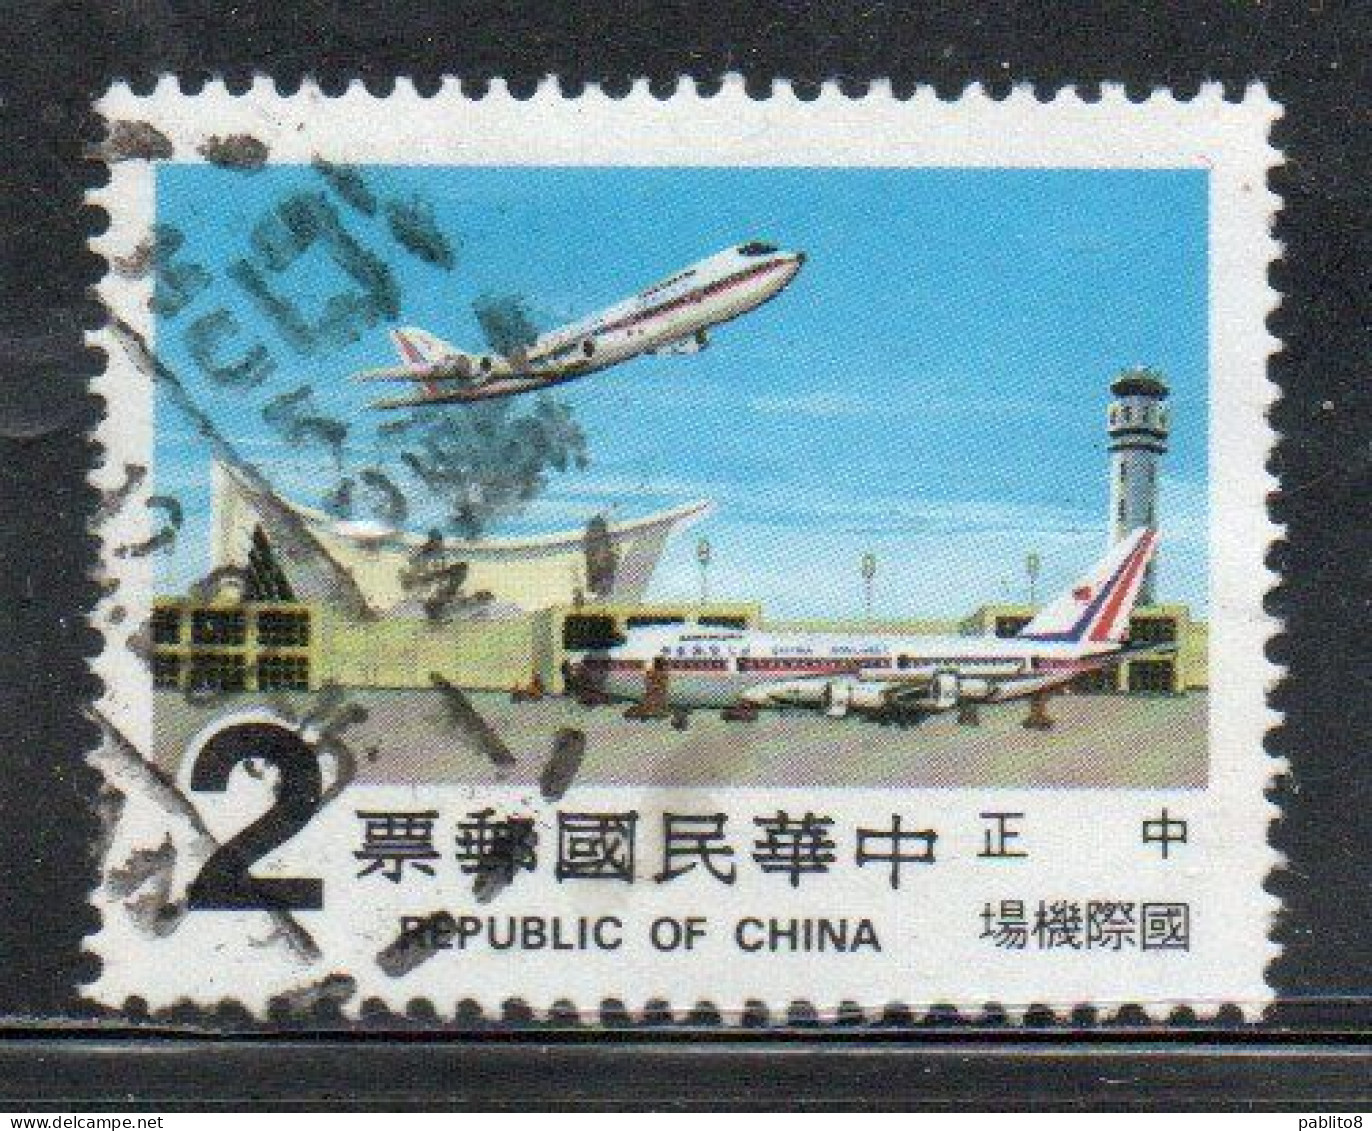 CHINA REPUBLIC CINA TAIWAN FORMOSA 1984 AIRLINES WORLD-WIDE SERVICE INAUGURATION JET CIRCLING GLOBE 2$ USED - Gebraucht